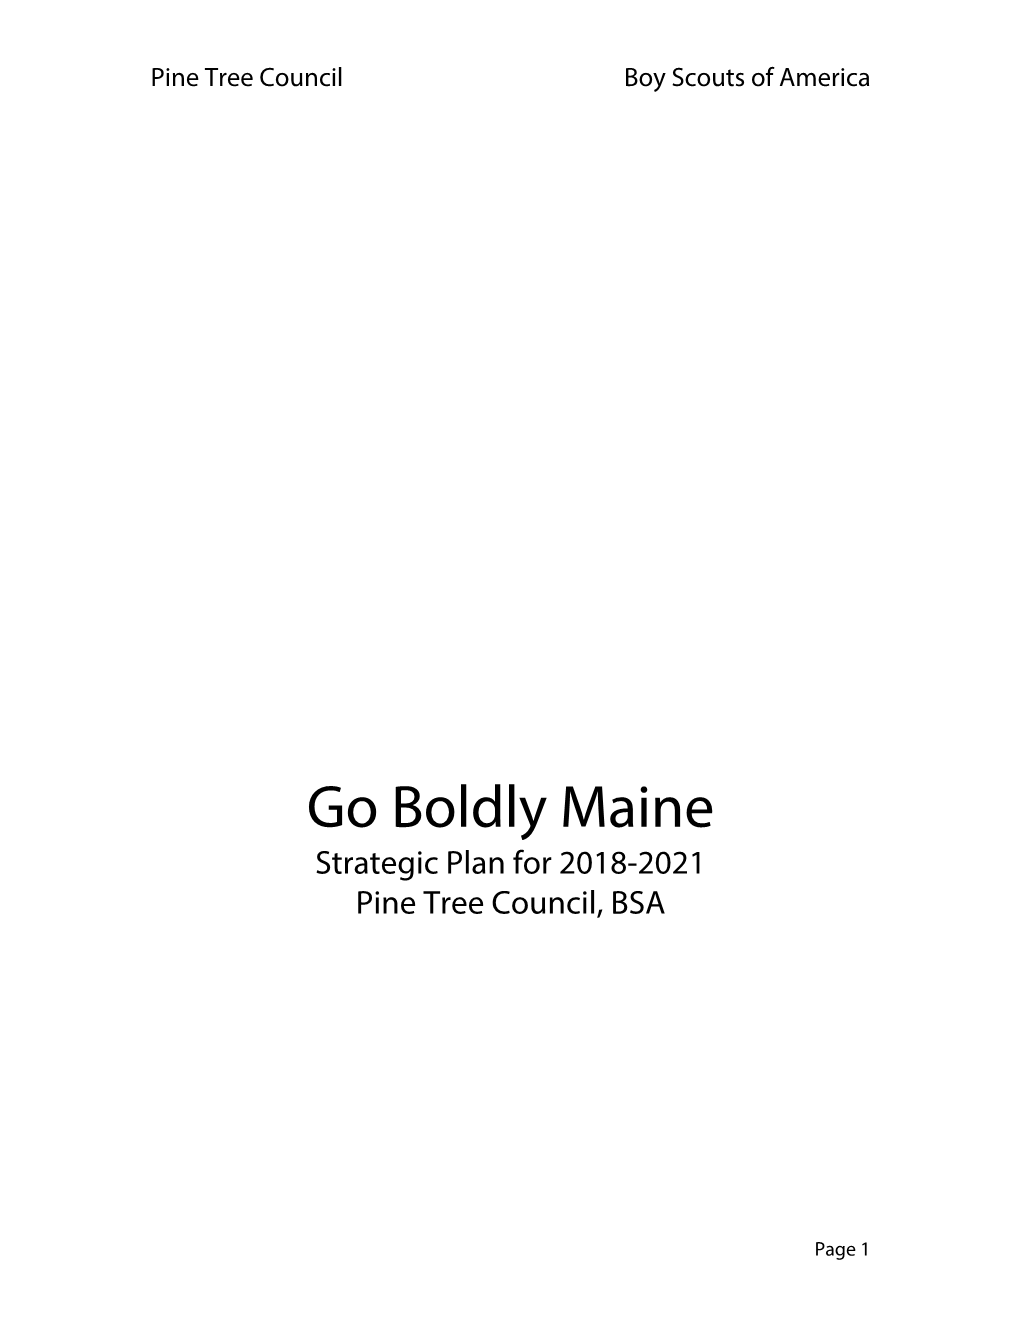 Go Boldly Maine Strategic Plan for 2018-2021 Pine Tree Council, BSA